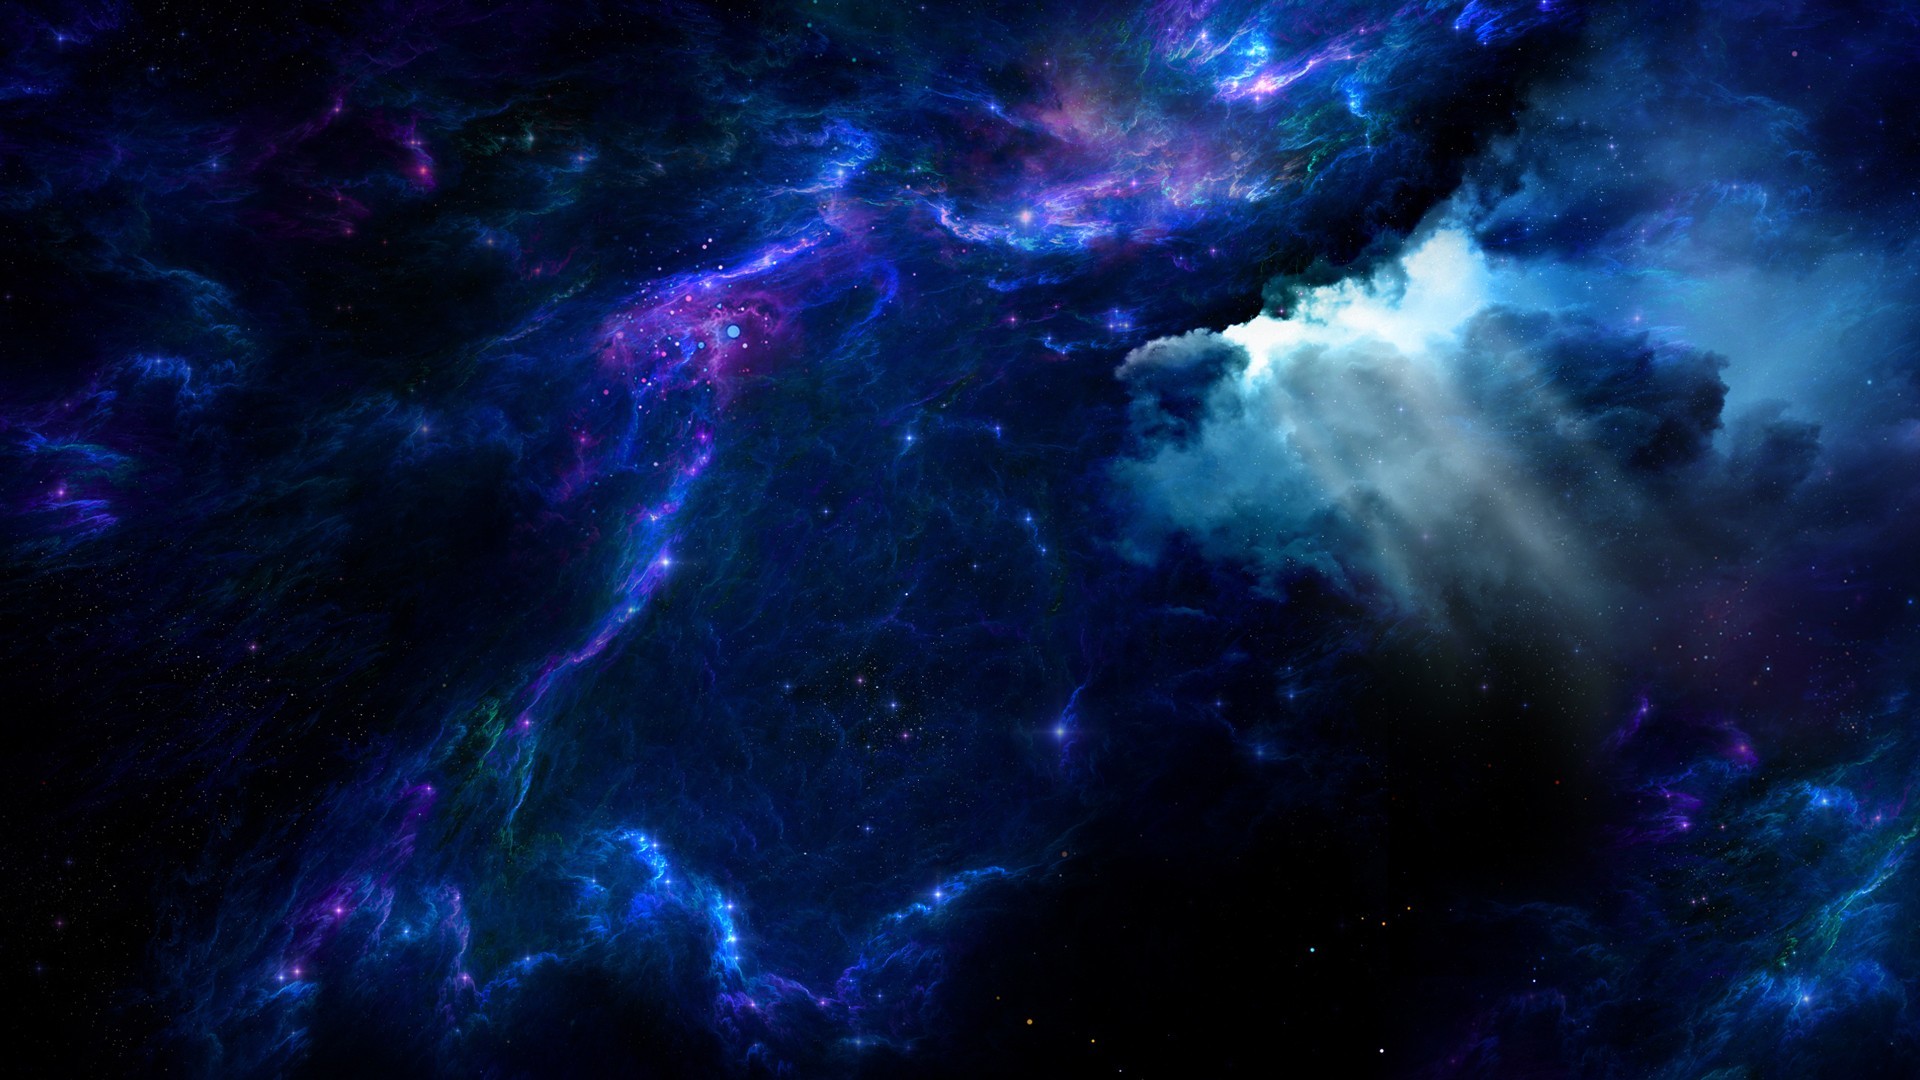 1920x1080 Download Wallpaper Very beautiful dark blue space nebula - 